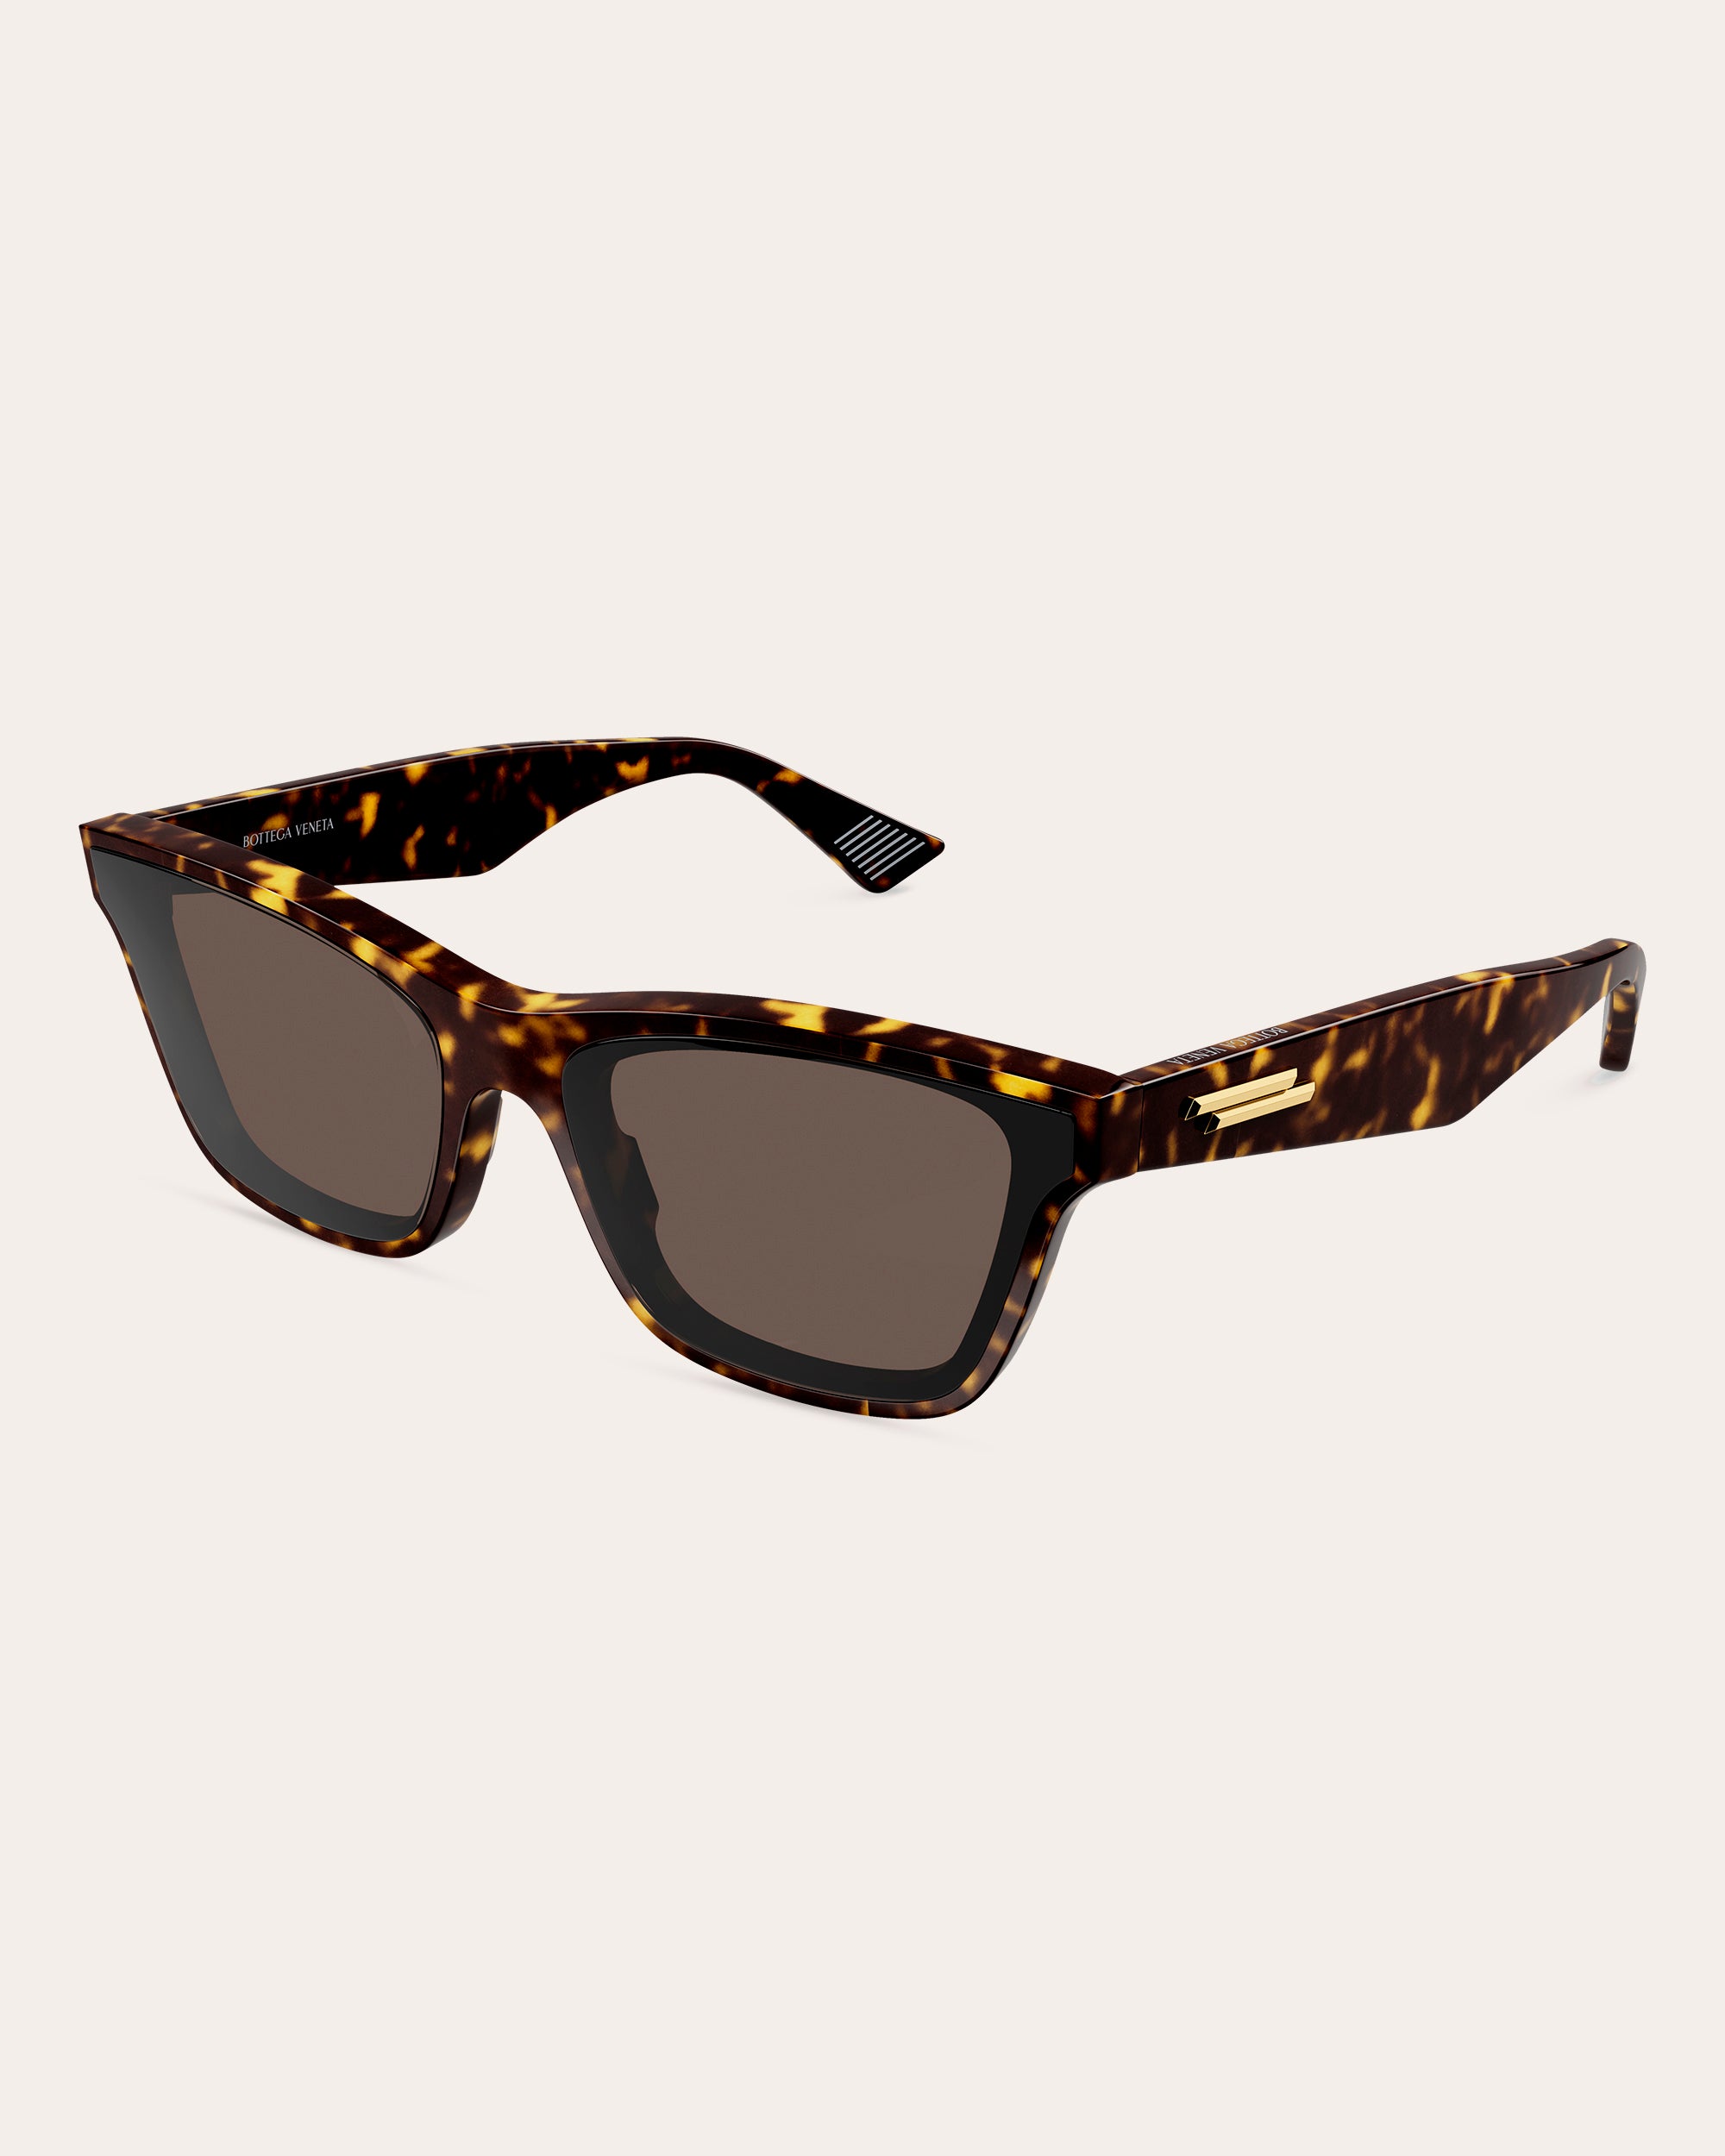  Bottega Veneta Geometric Navigator Sunglasses, Gold/Gold/Brown,  One Size : Clothing, Shoes & Jewelry